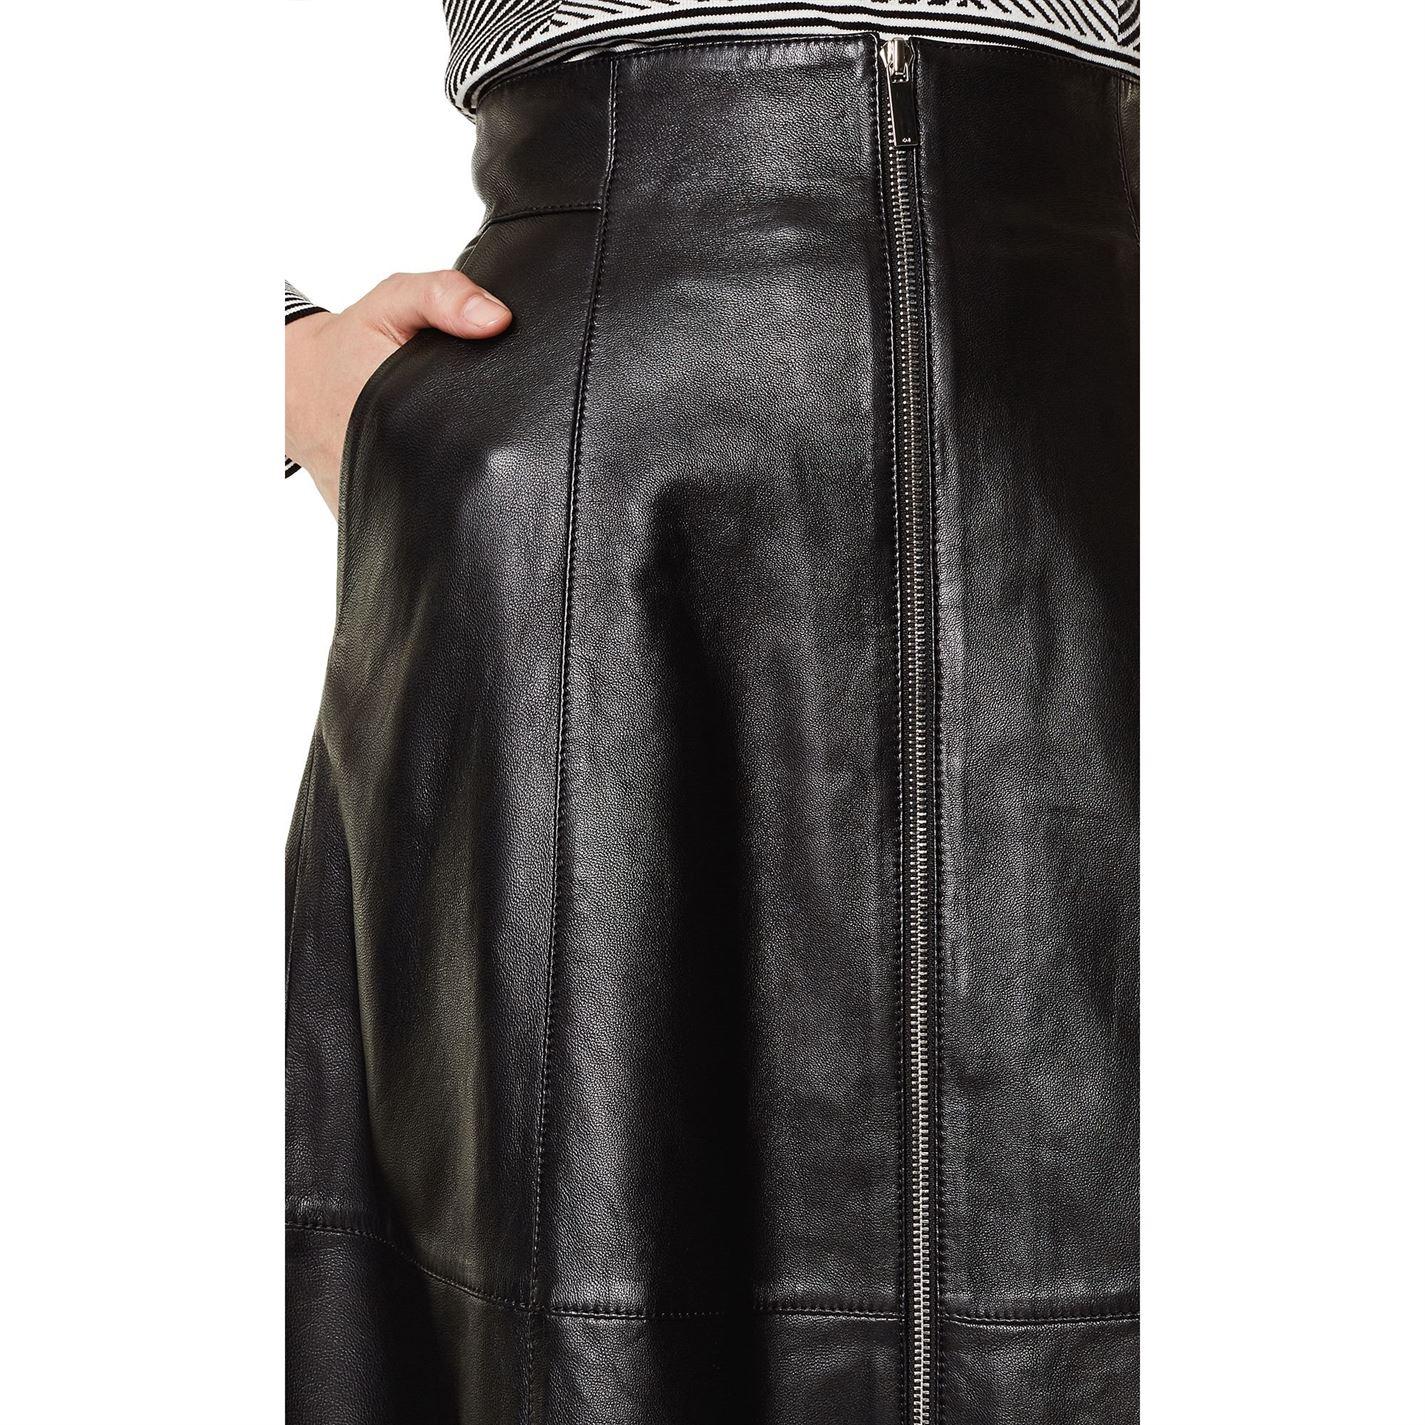 Karen Millen Midi Leather Skirt in Black - Lyst